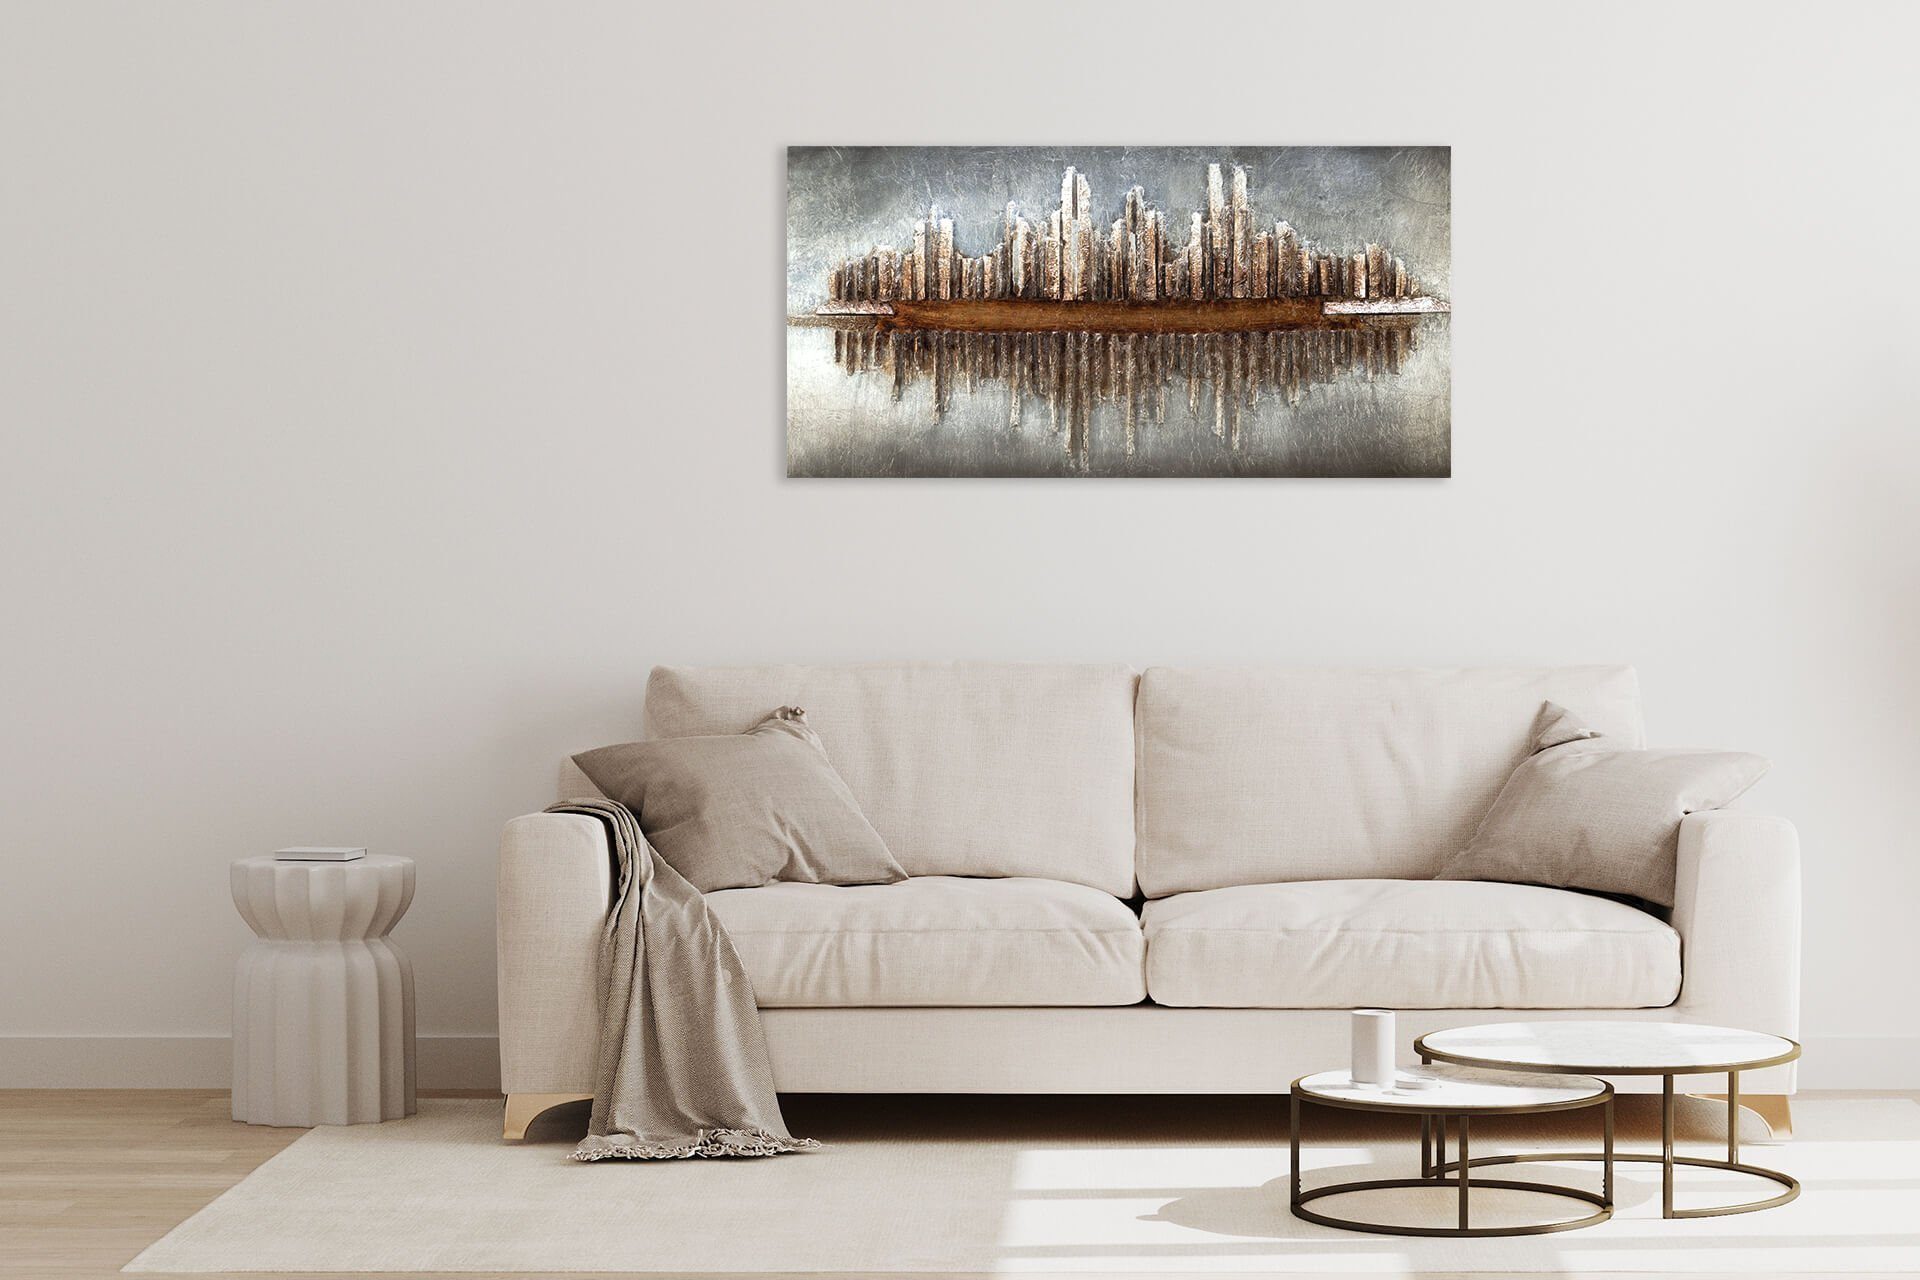 cm, KUNSTLOFT Wandbild Holzbild aus Holz 120x60 handgefertiges Silhouette Skycraper